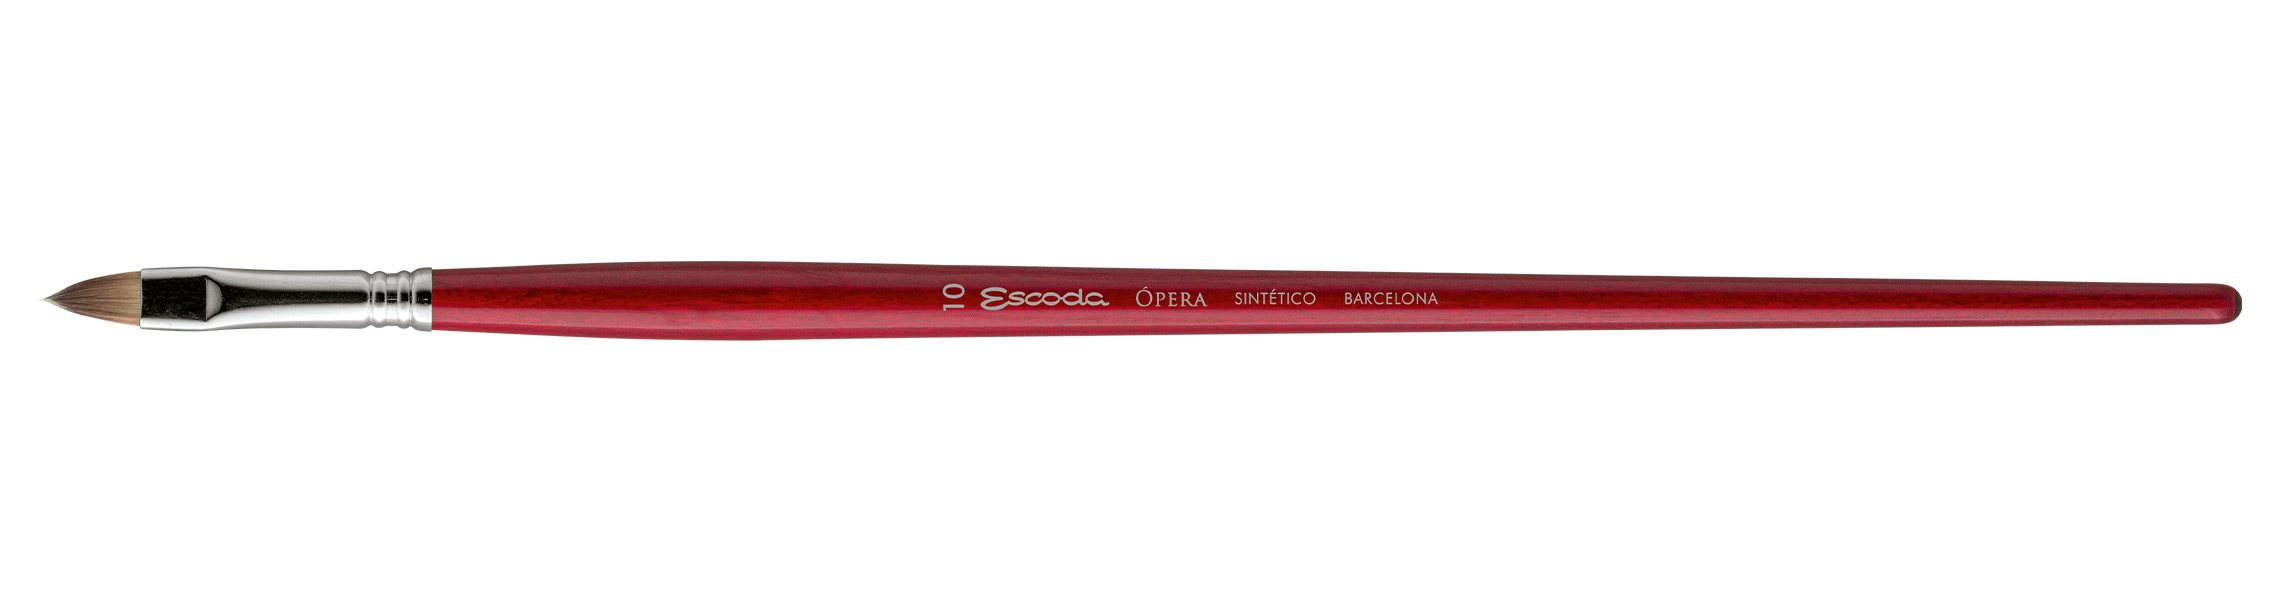 Escoda brushes serie 3060